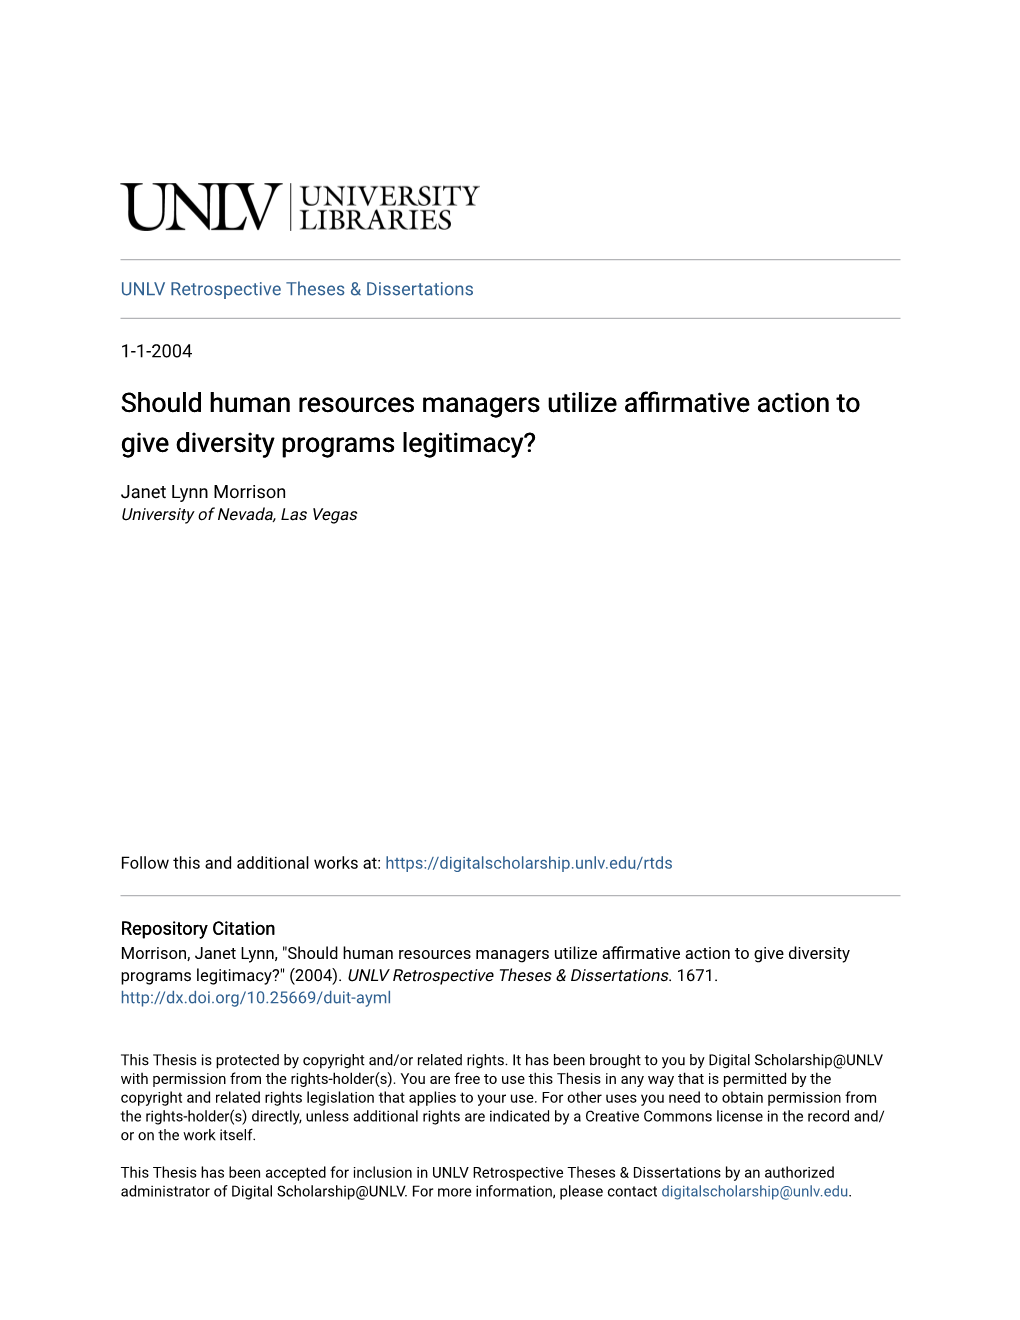 Should Human Resources Managers Utilize Affirmative Action to Give Diversity Programs Legitimacy?